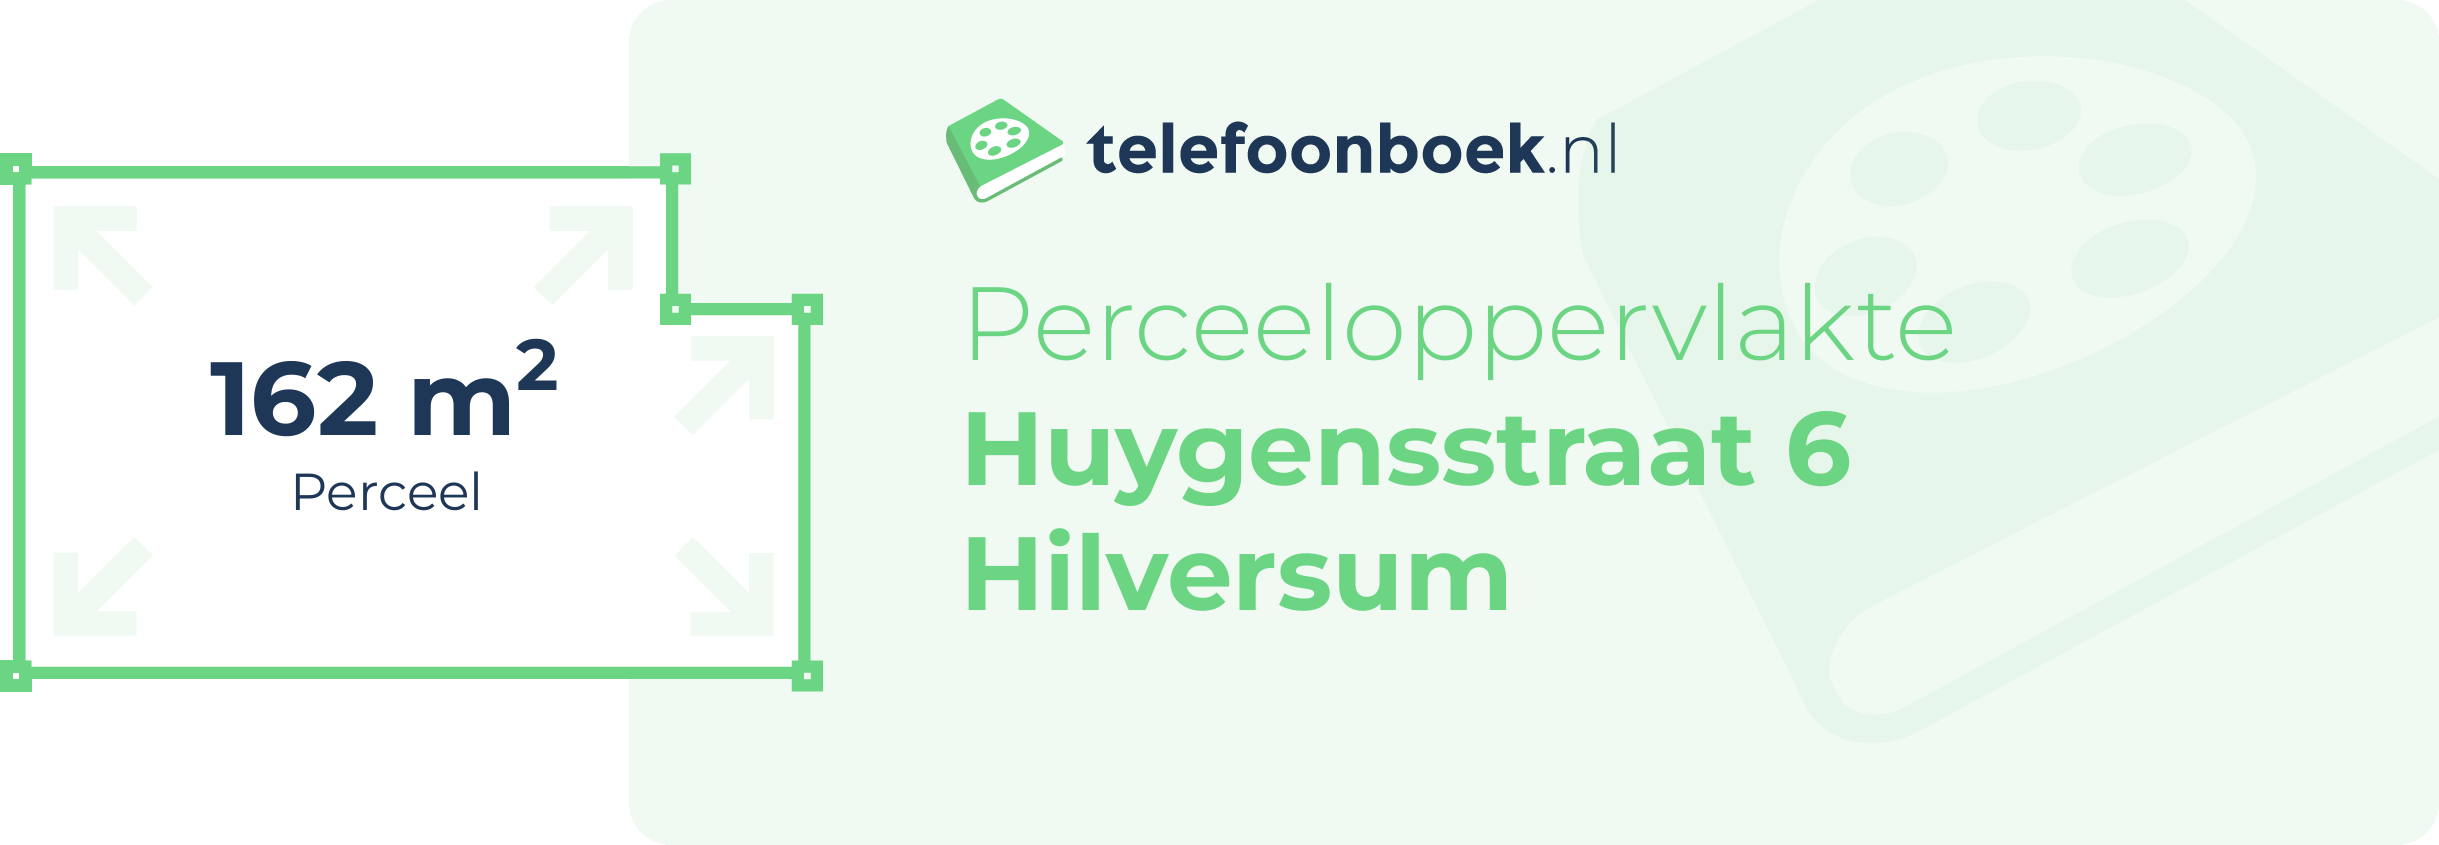 Perceeloppervlakte Huygensstraat 6 Hilversum